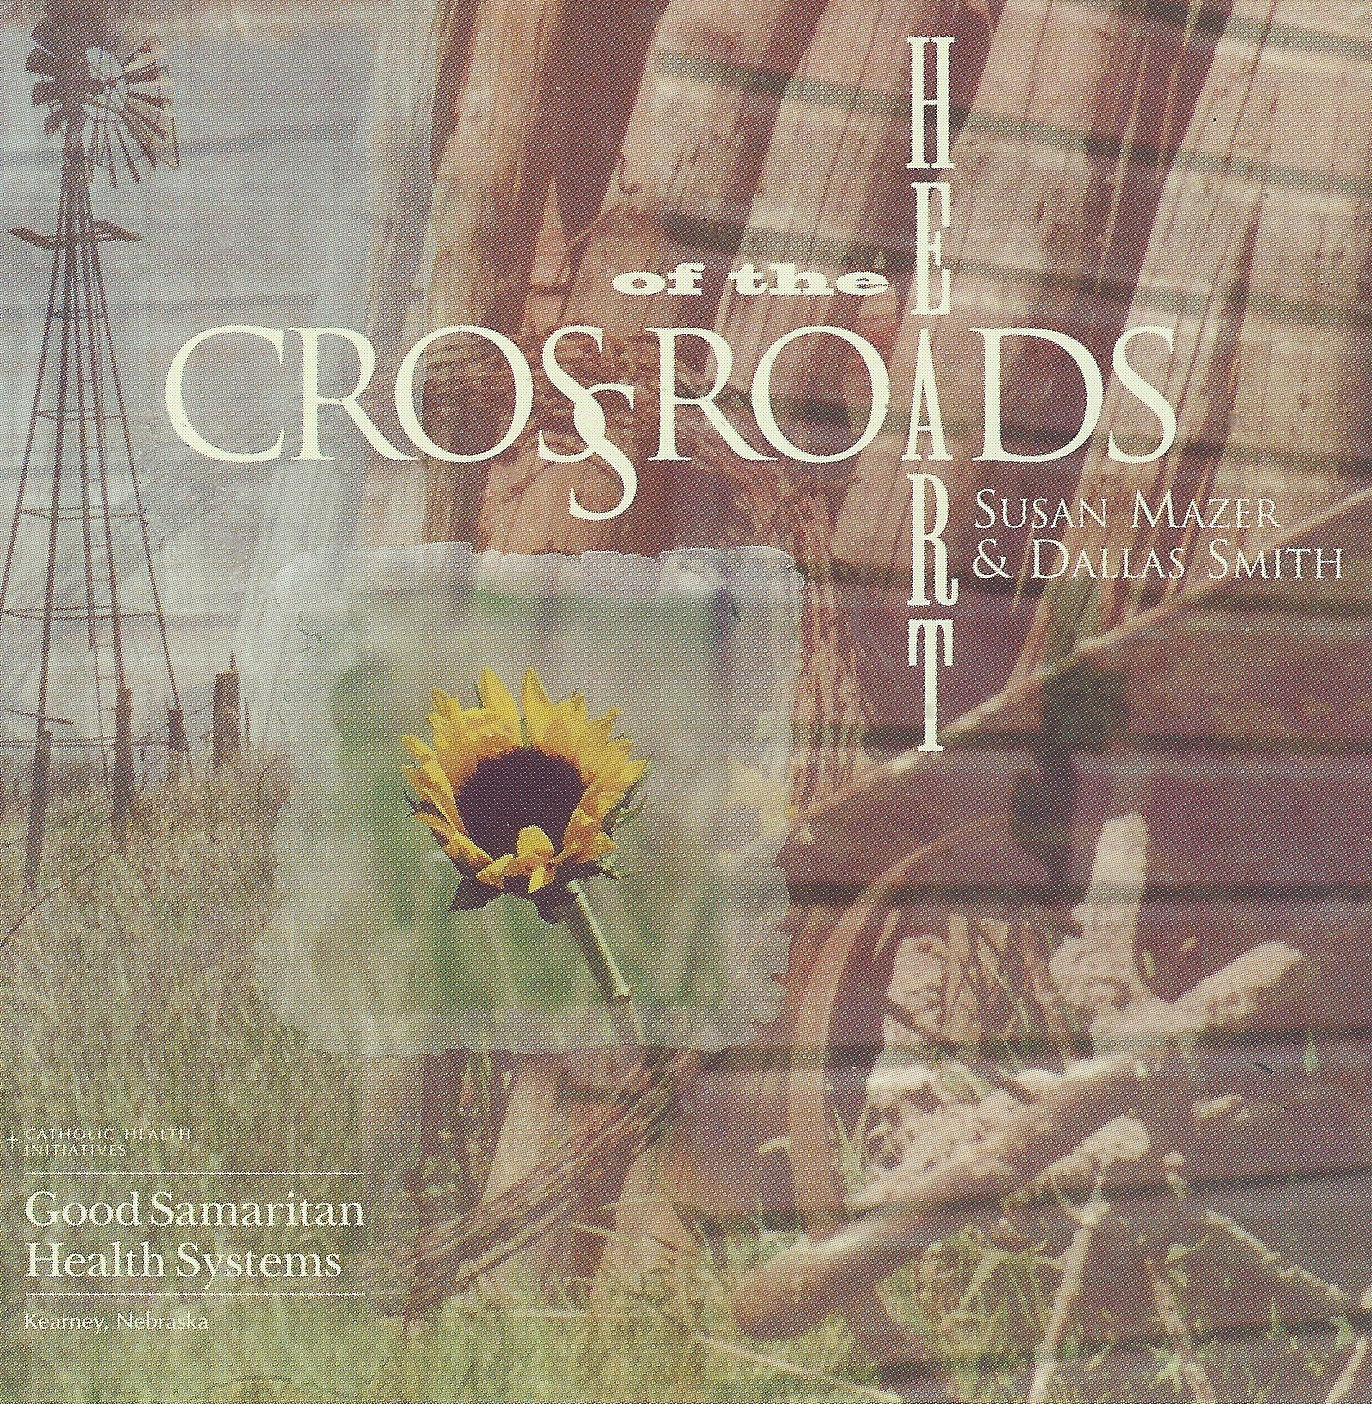 Crossroads of the Heart album cover